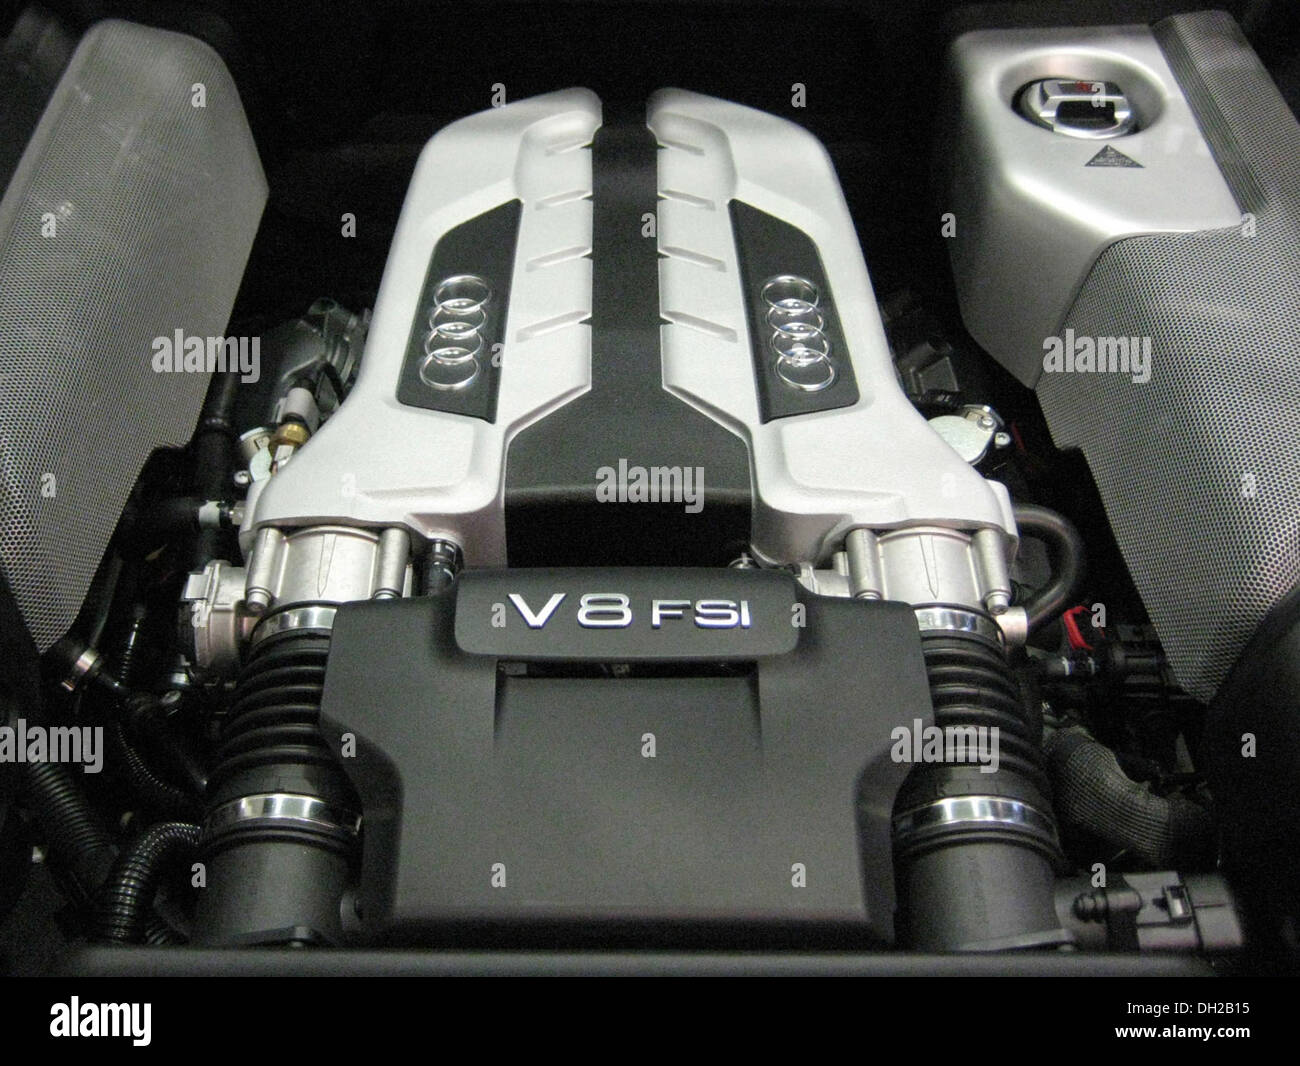 2007 Audi R8 Motor Stockfotografie - Alamy